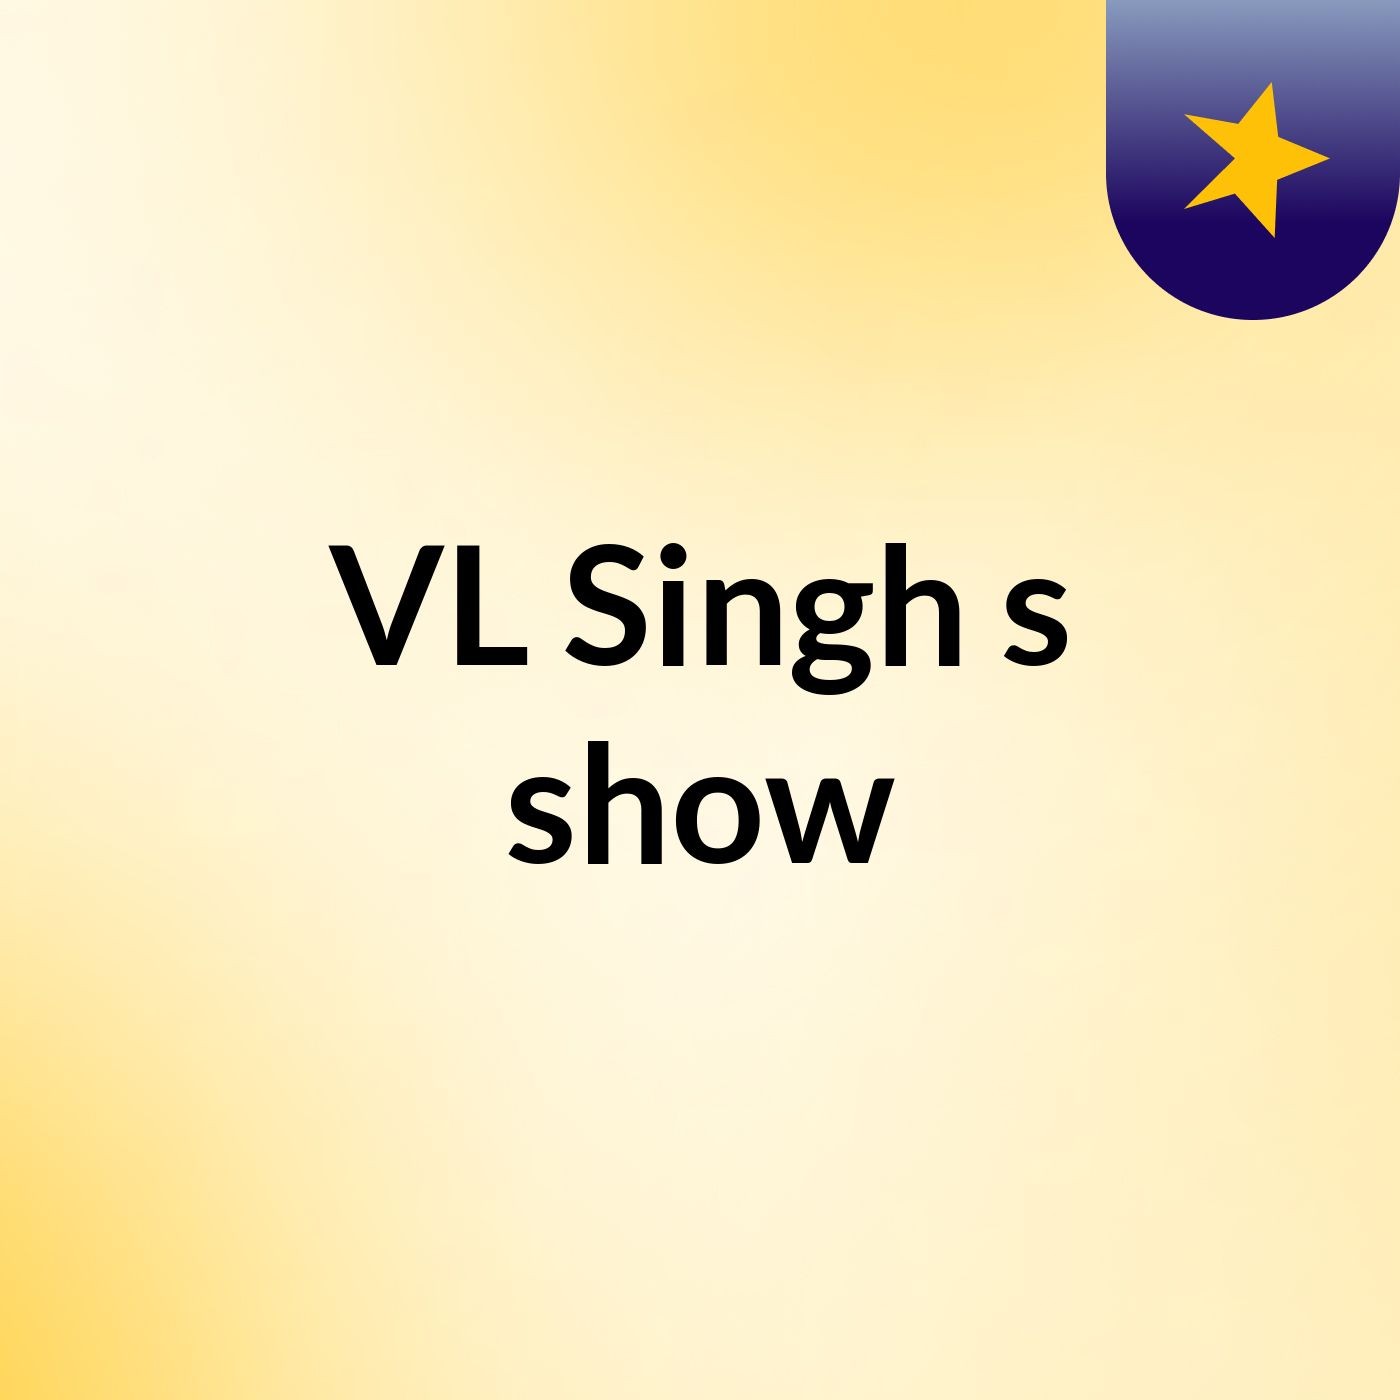 VL Singh's show